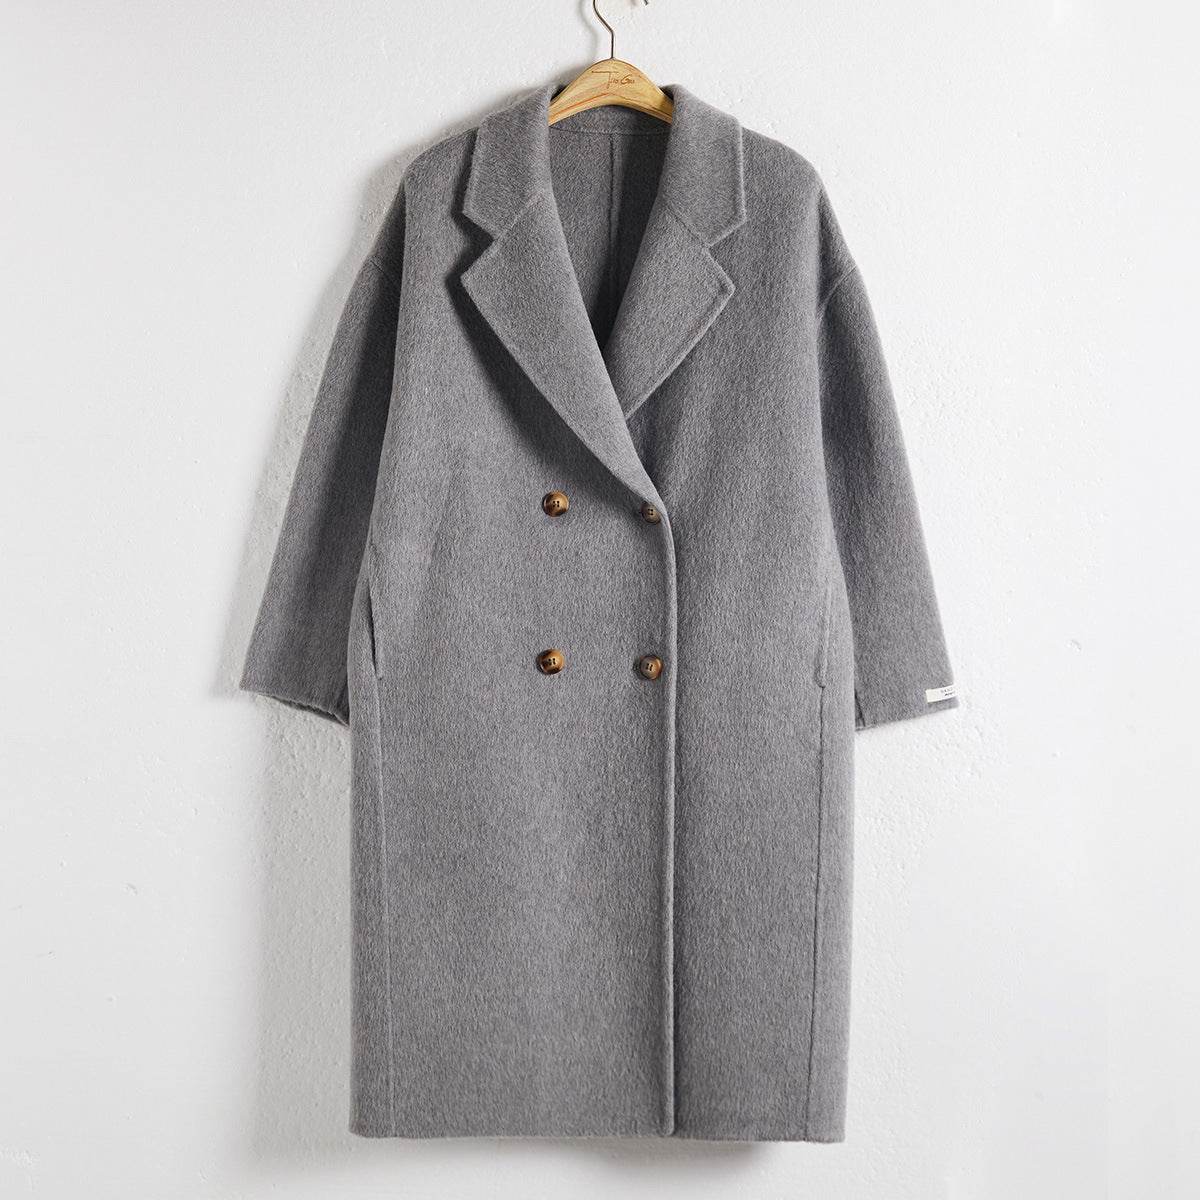 Fashion Women Wool Winter Long Coats-Outerwear-Gray-S-Free Shipping Leatheretro